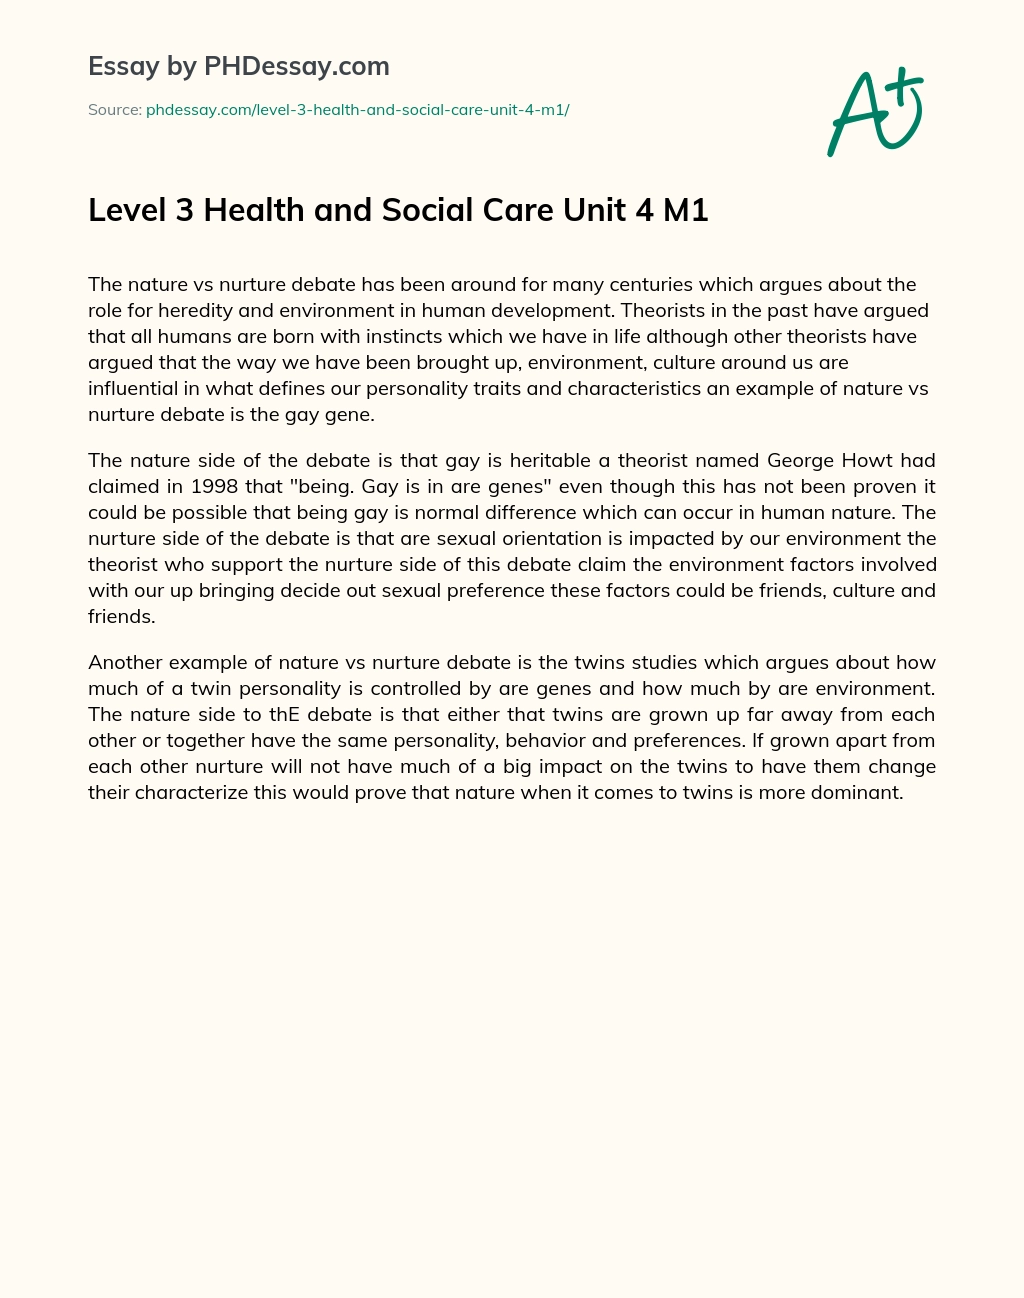 Level 3 Health and Social Care Unit 4 M1 essay